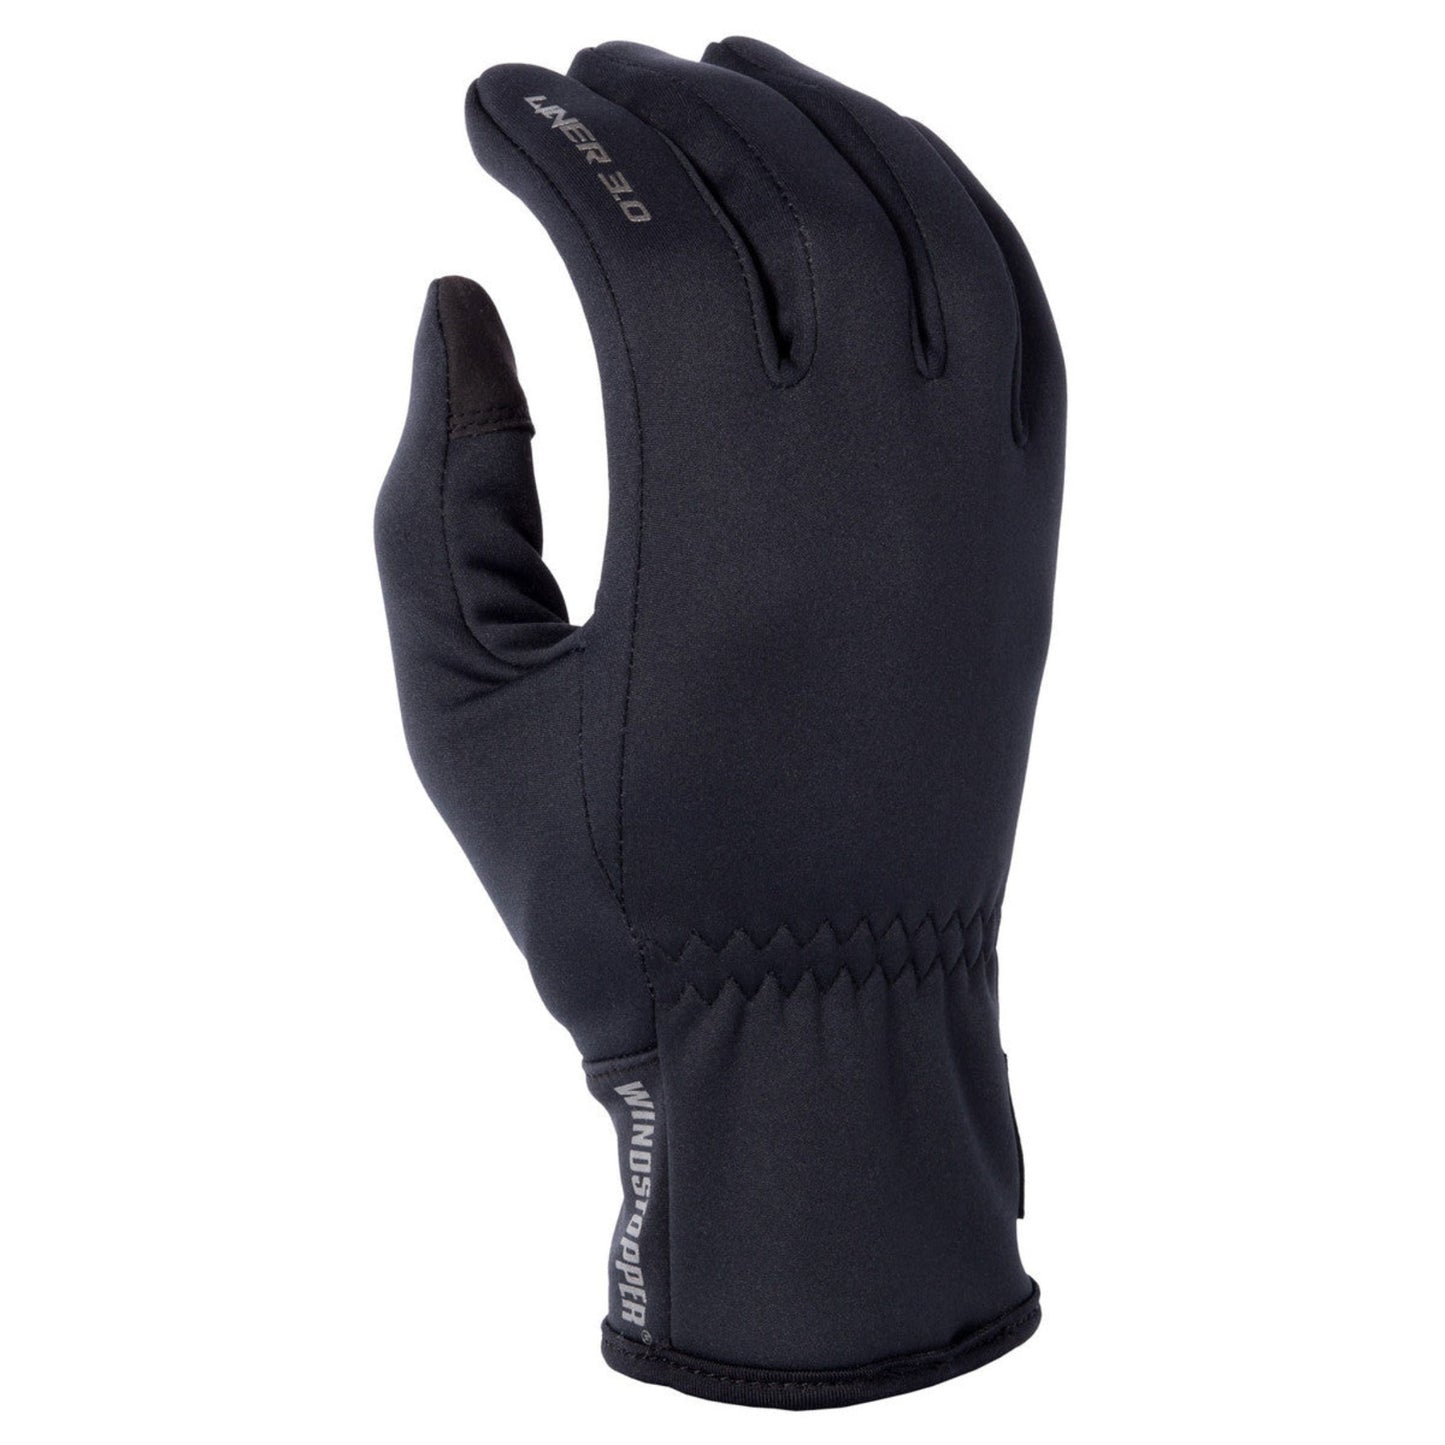 Klim Glove Liner 3.0 Black